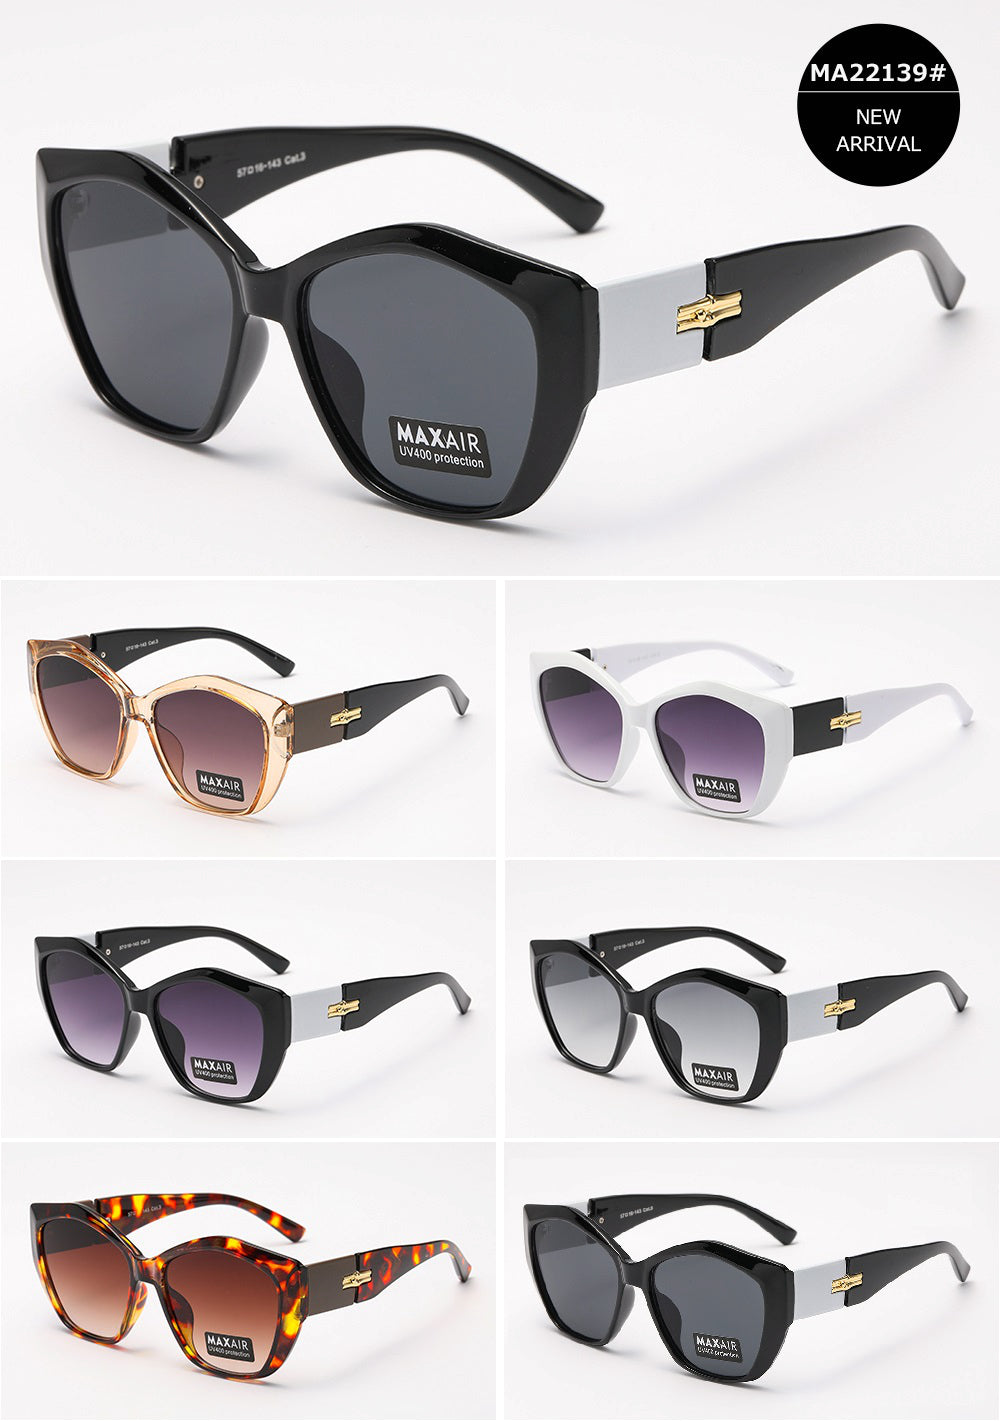 Maxair 22139 Sunglasses